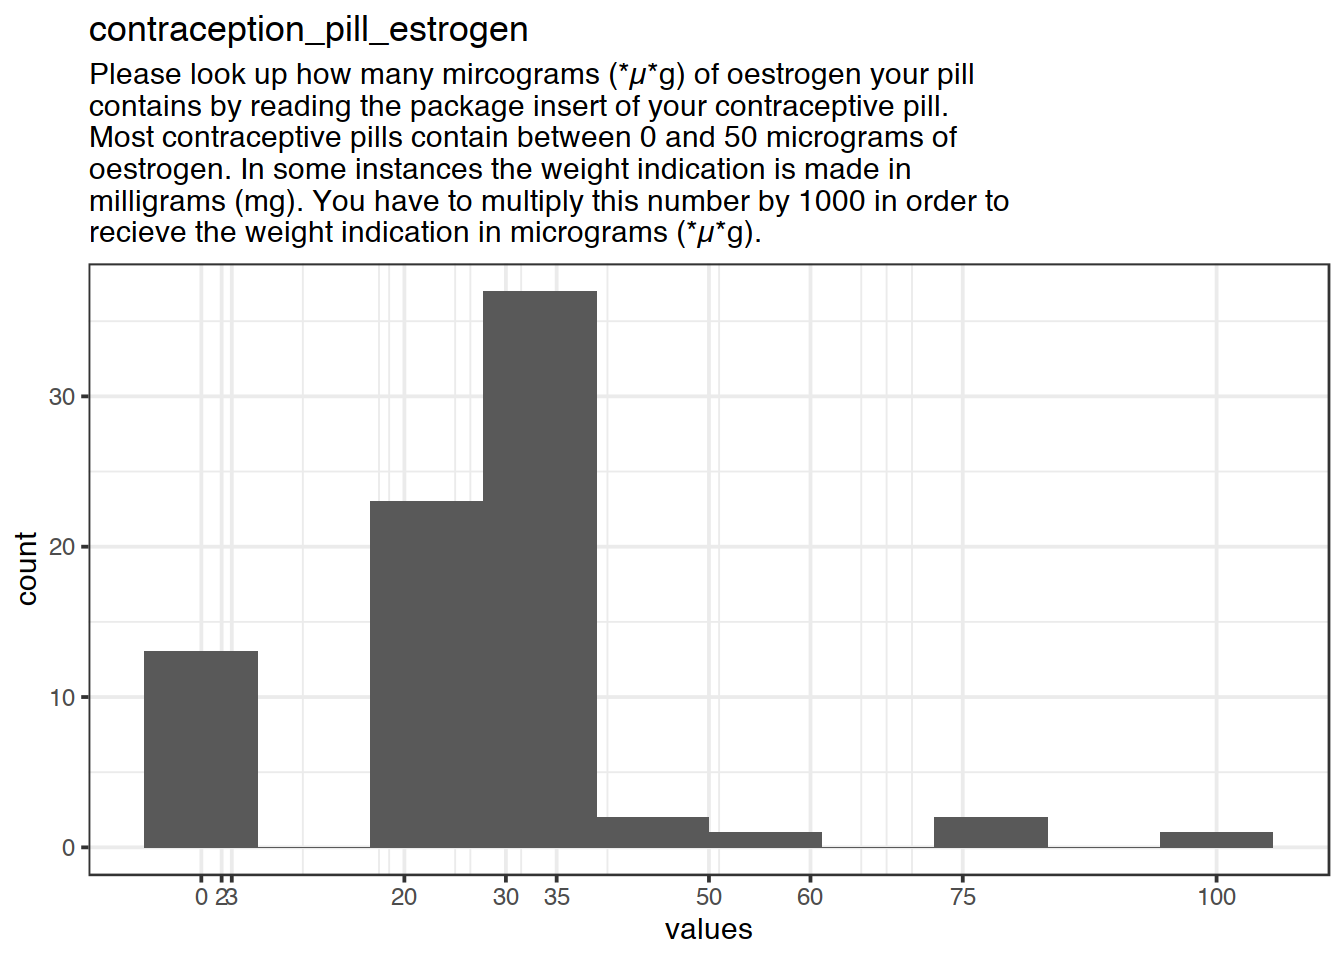 Distribution of values for contraception_pill_estrogen